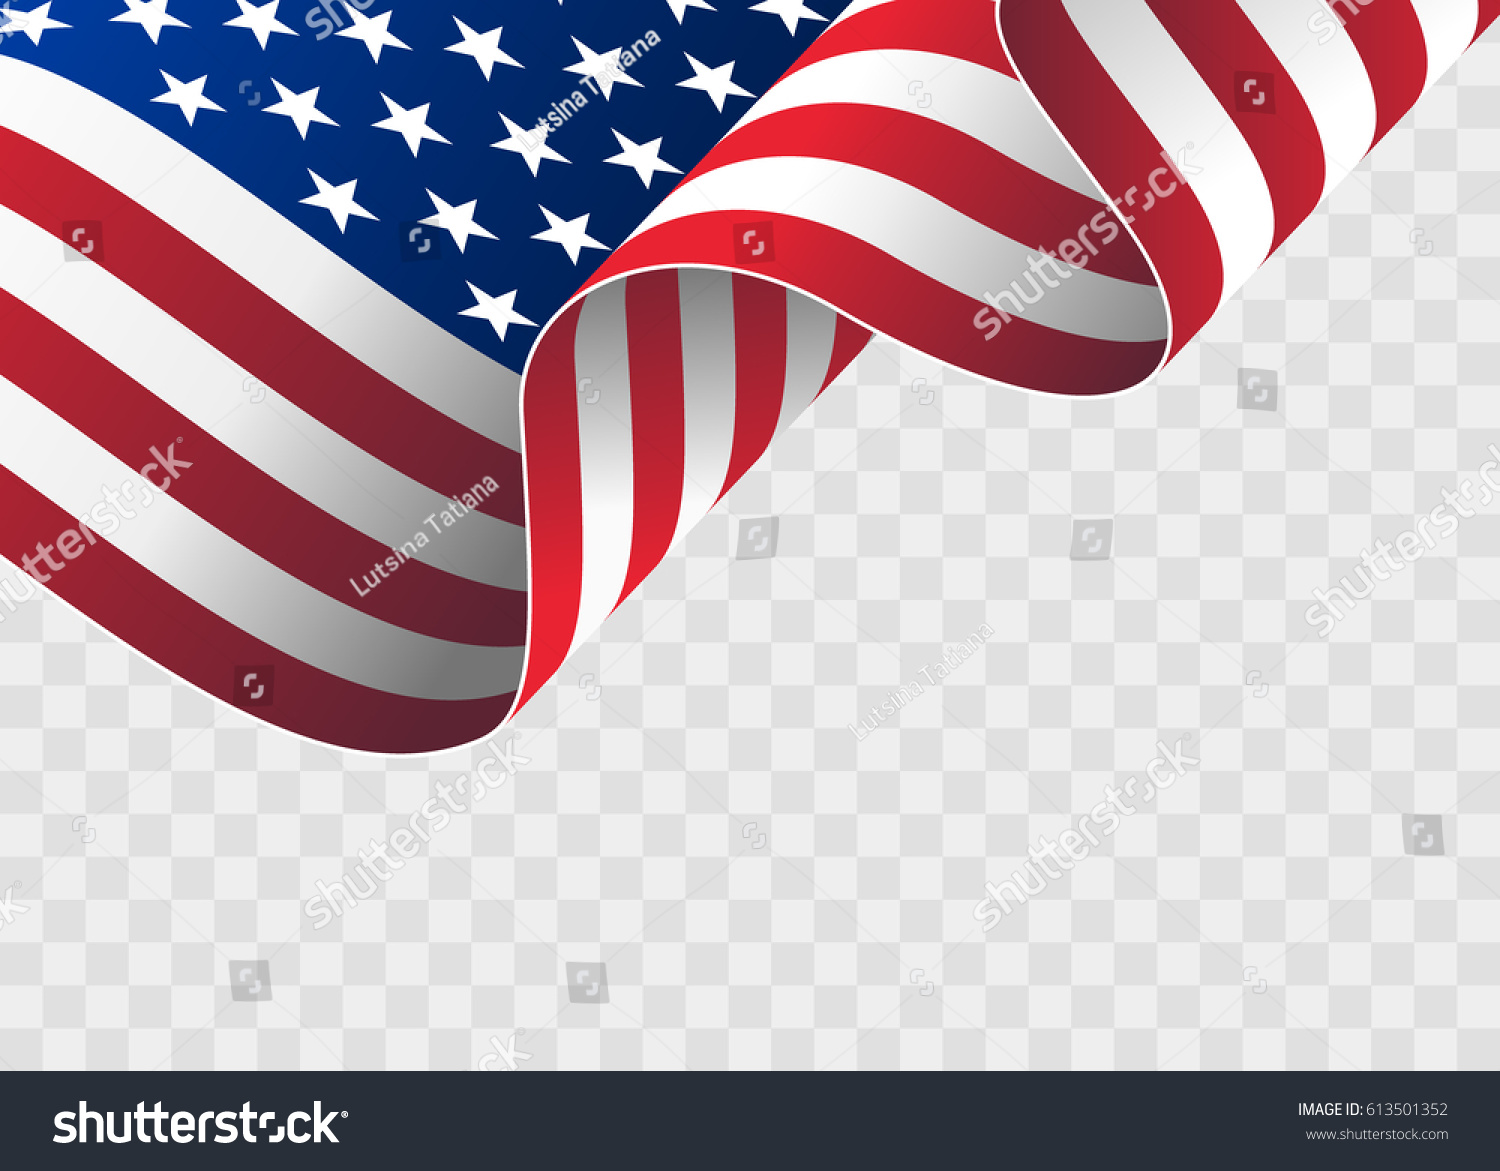 Download Waving Flag United States America Illustration Stock ...